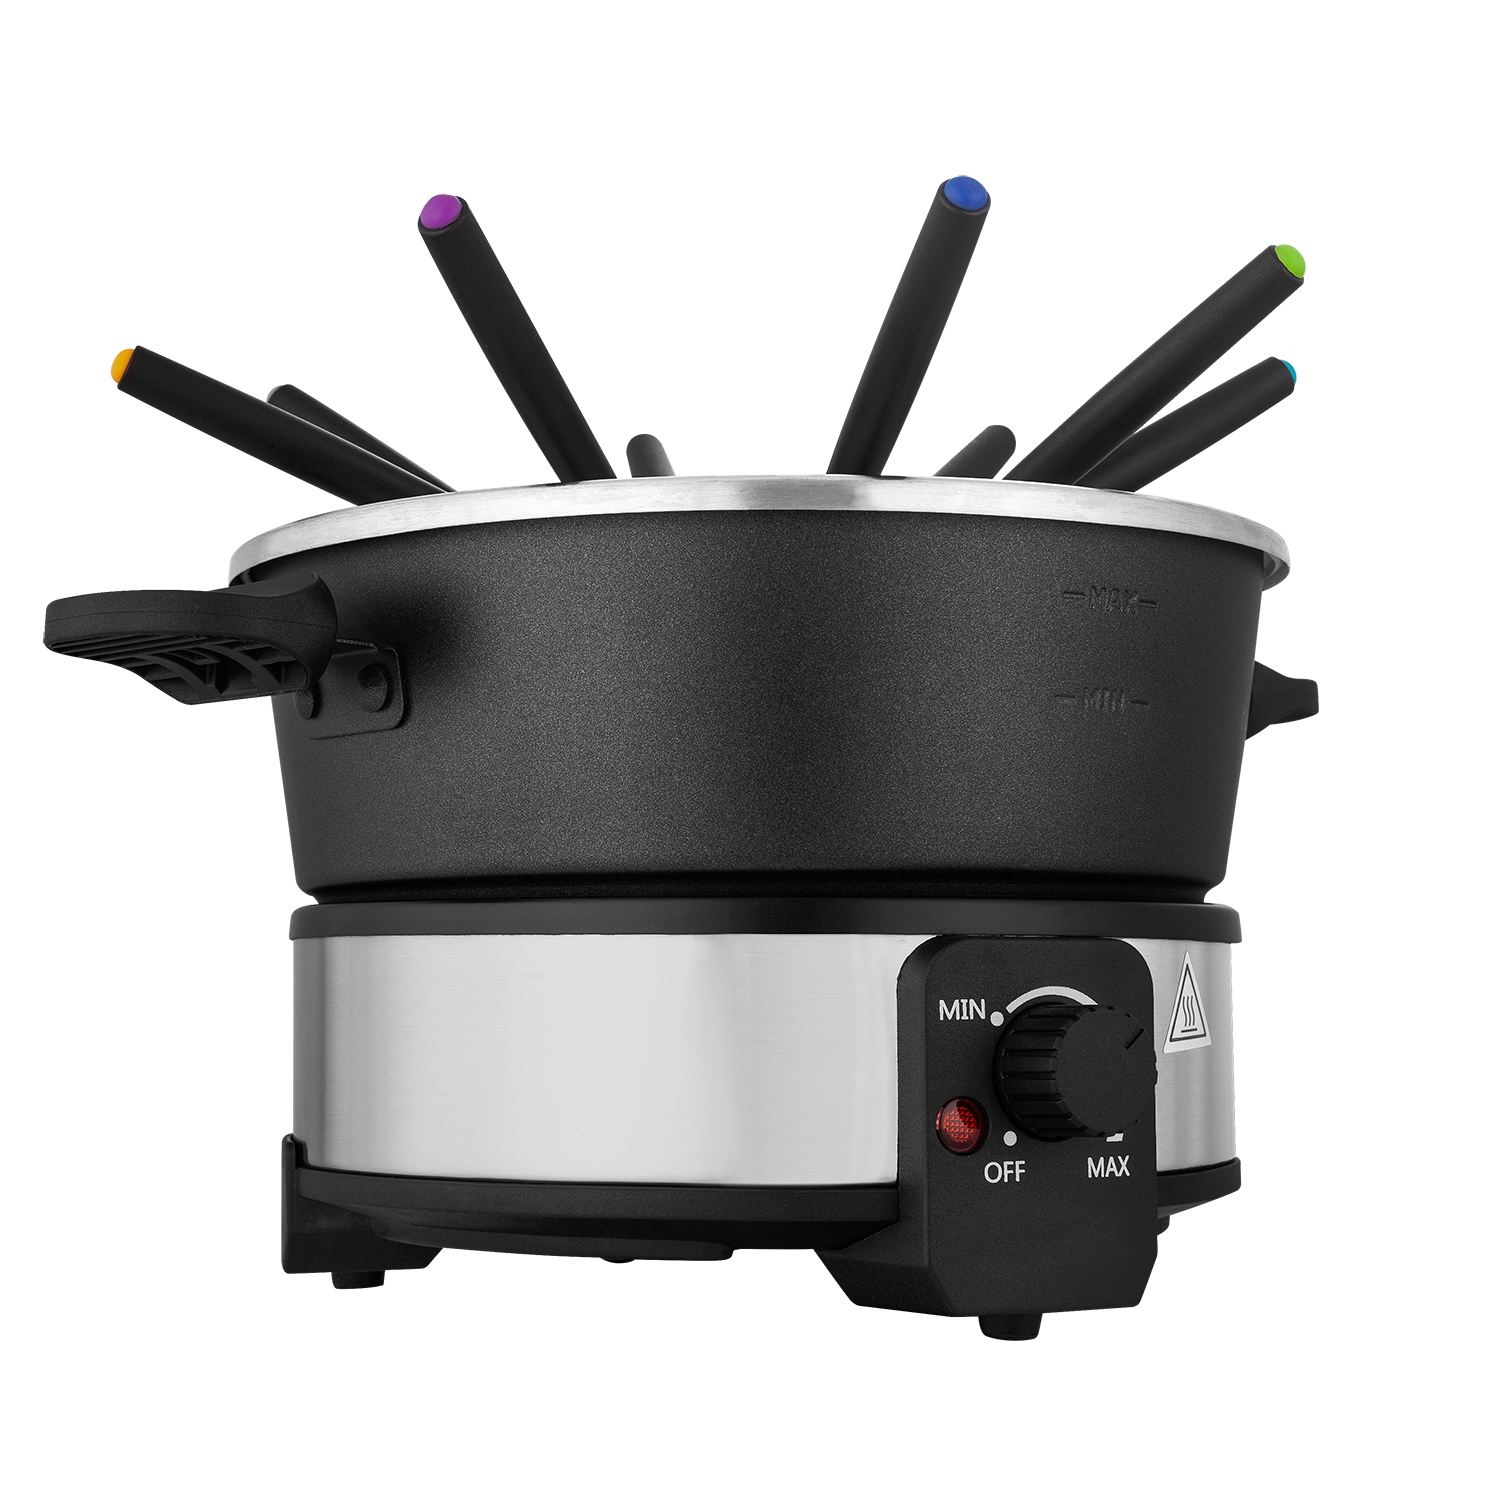 1000W Mini electric fondue pot